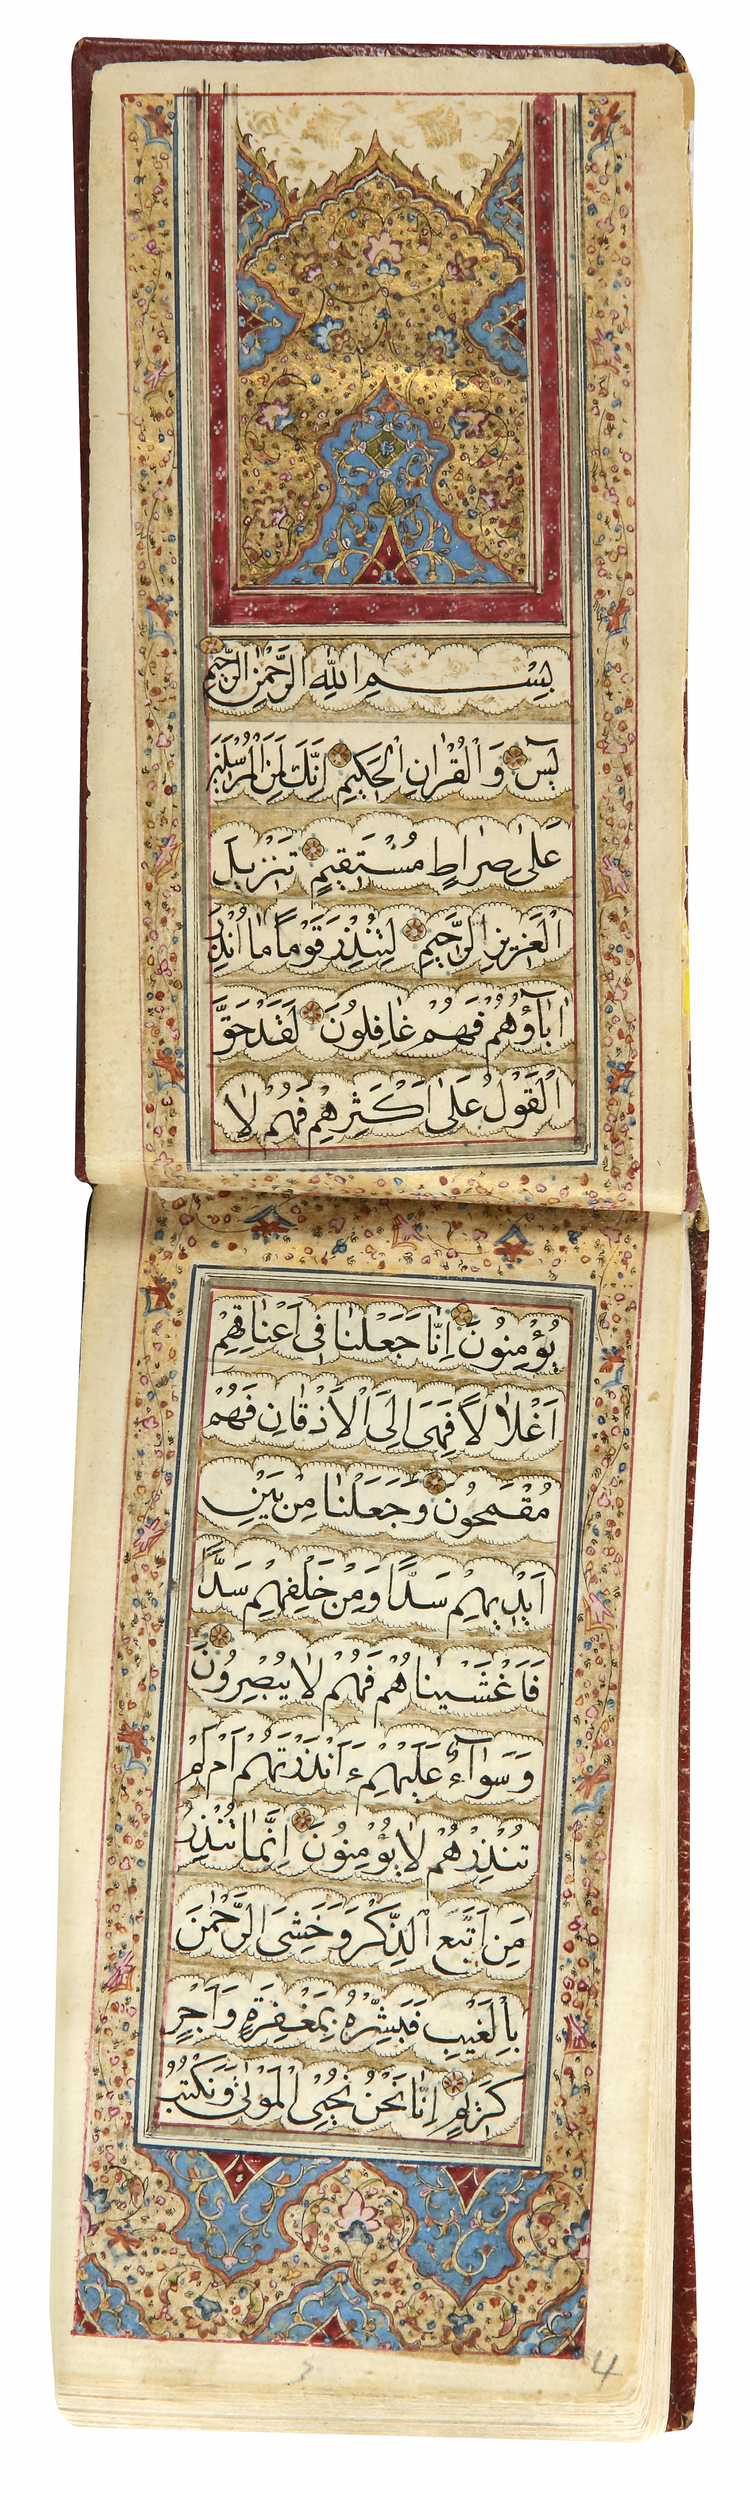 A PERSIAN PRAYER BOOK, IRAN, 18TH CENTURY